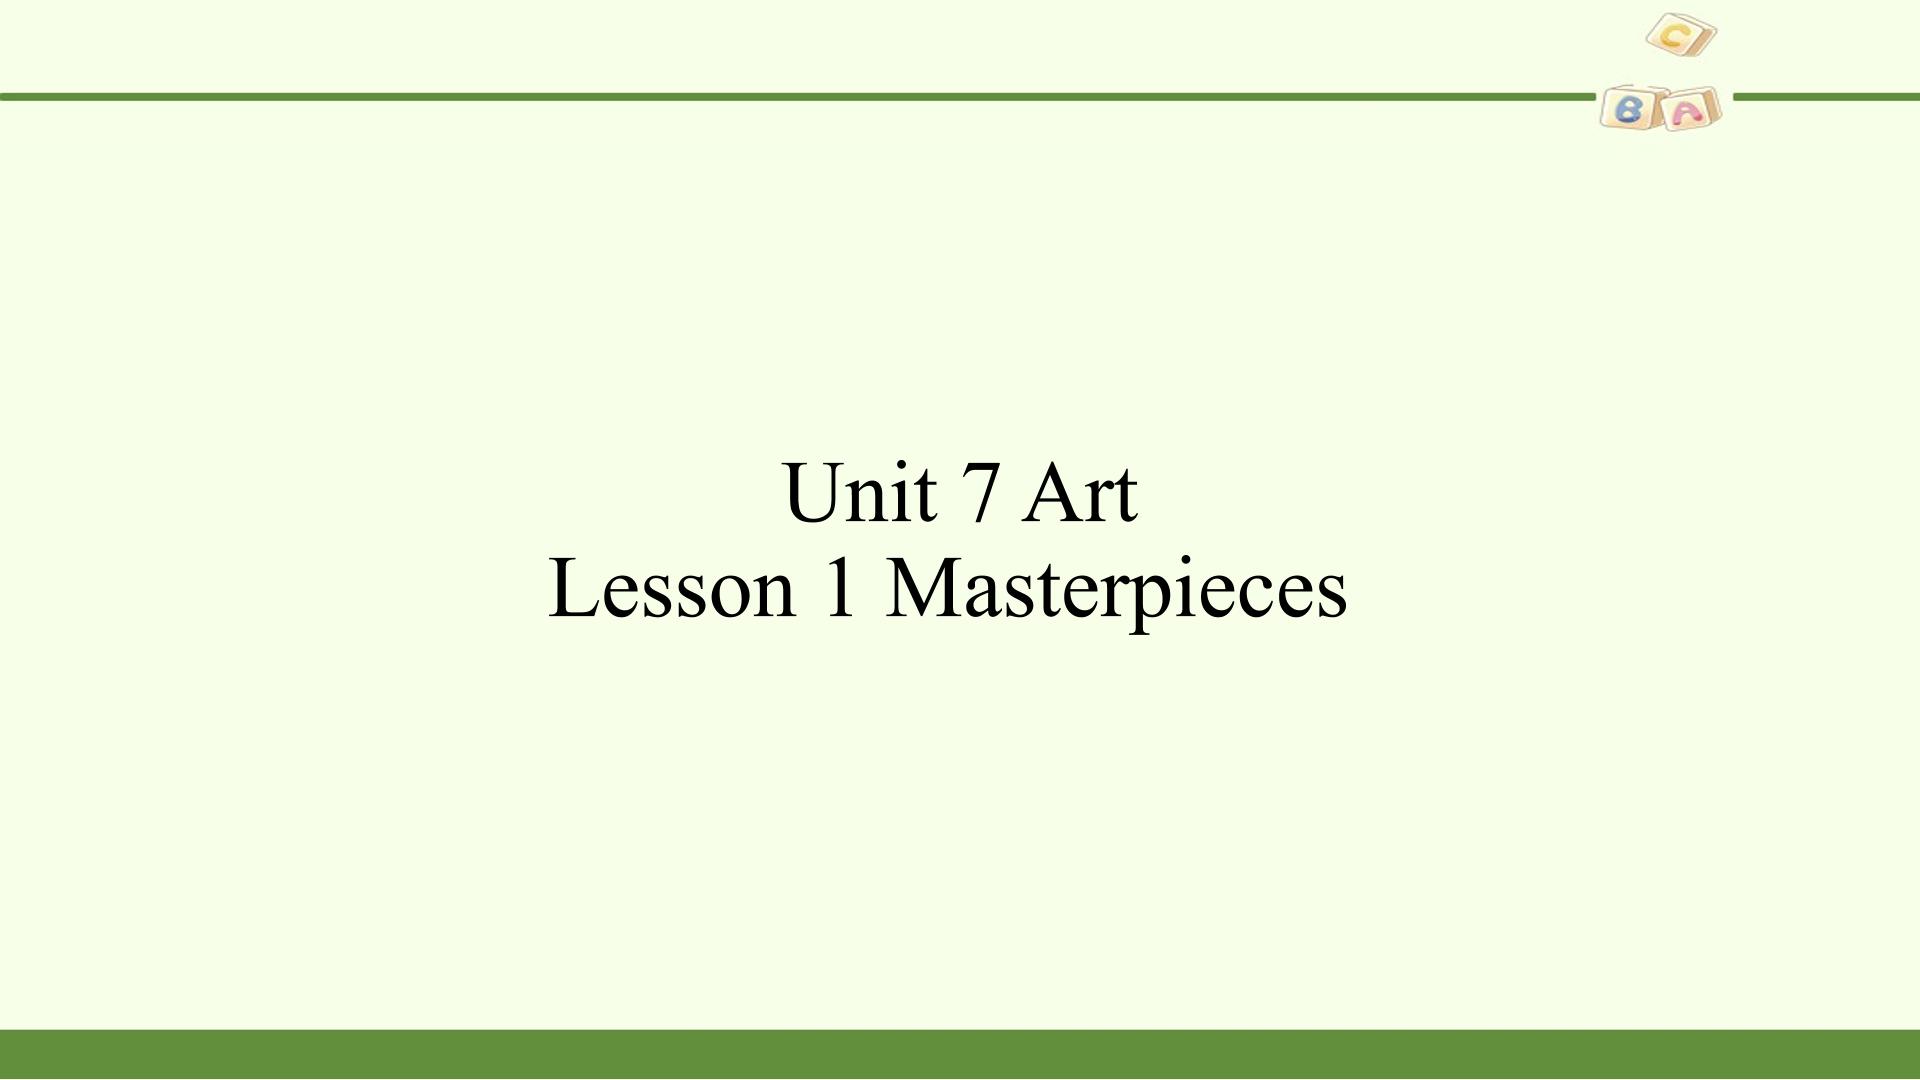 Lesson 1 Masterpieces